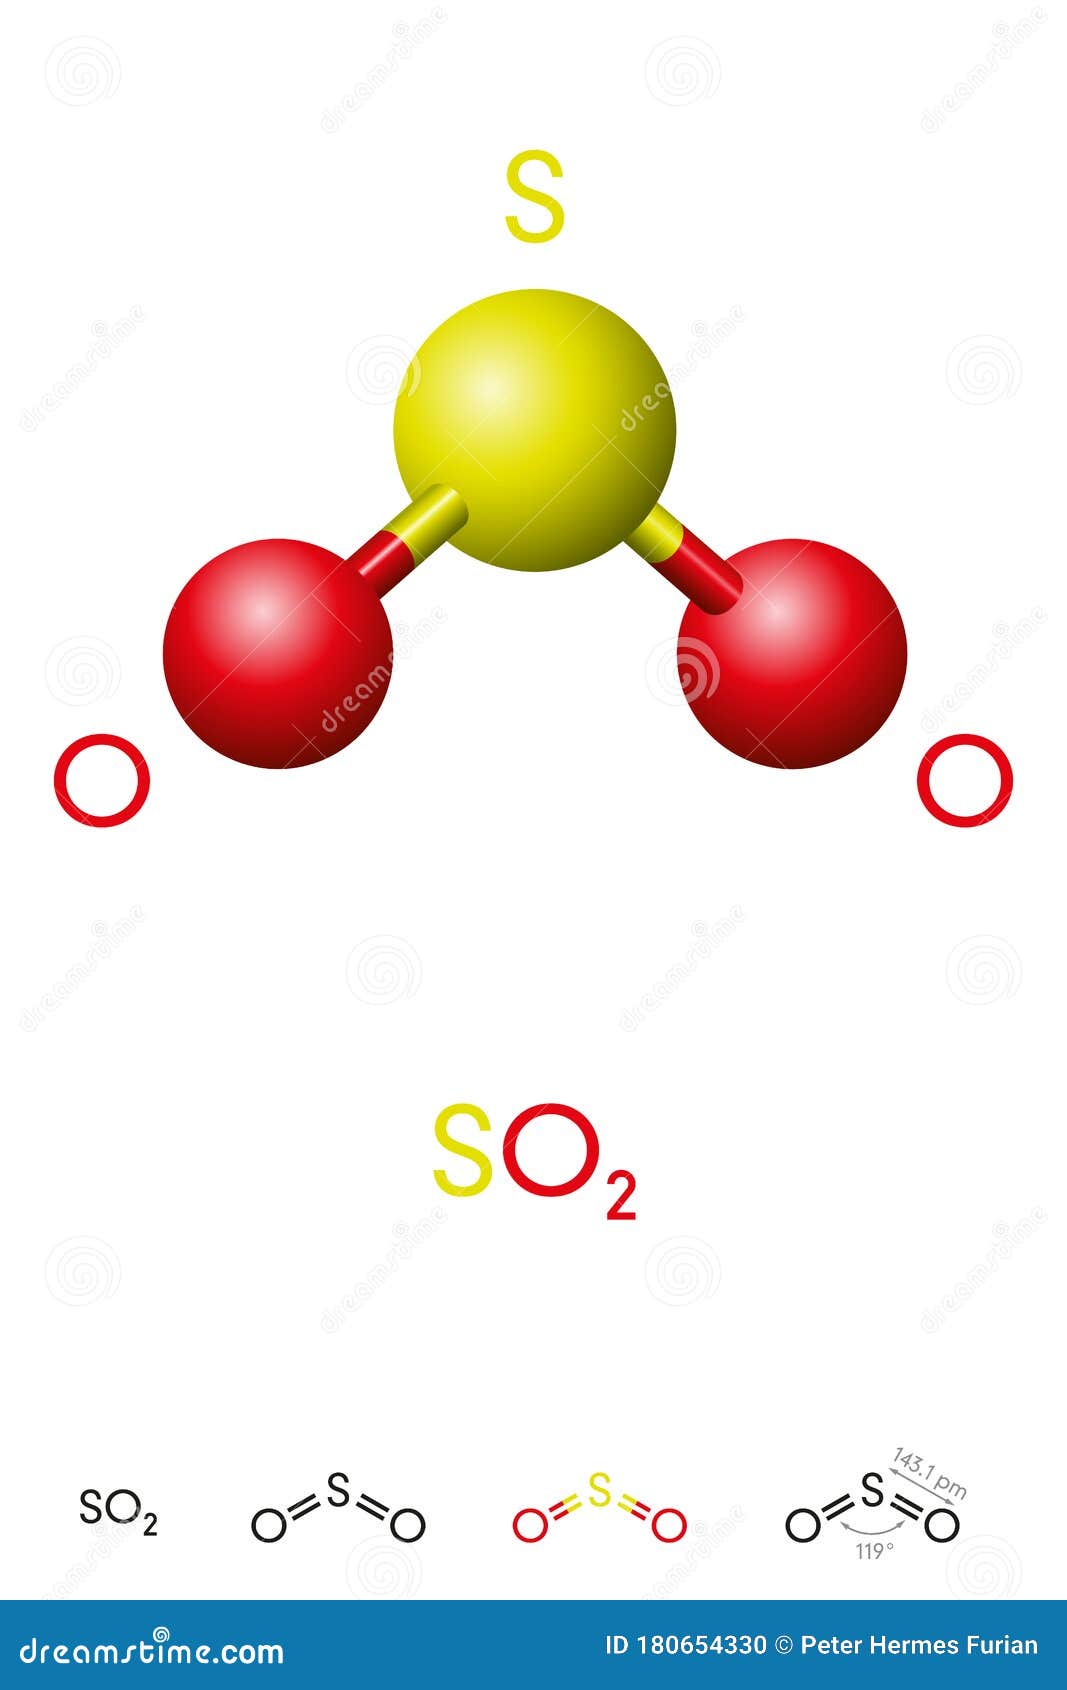 SO2 Sulfur Dioxide Molecule Cartoon Vector | CartoonDealer.com #64274365